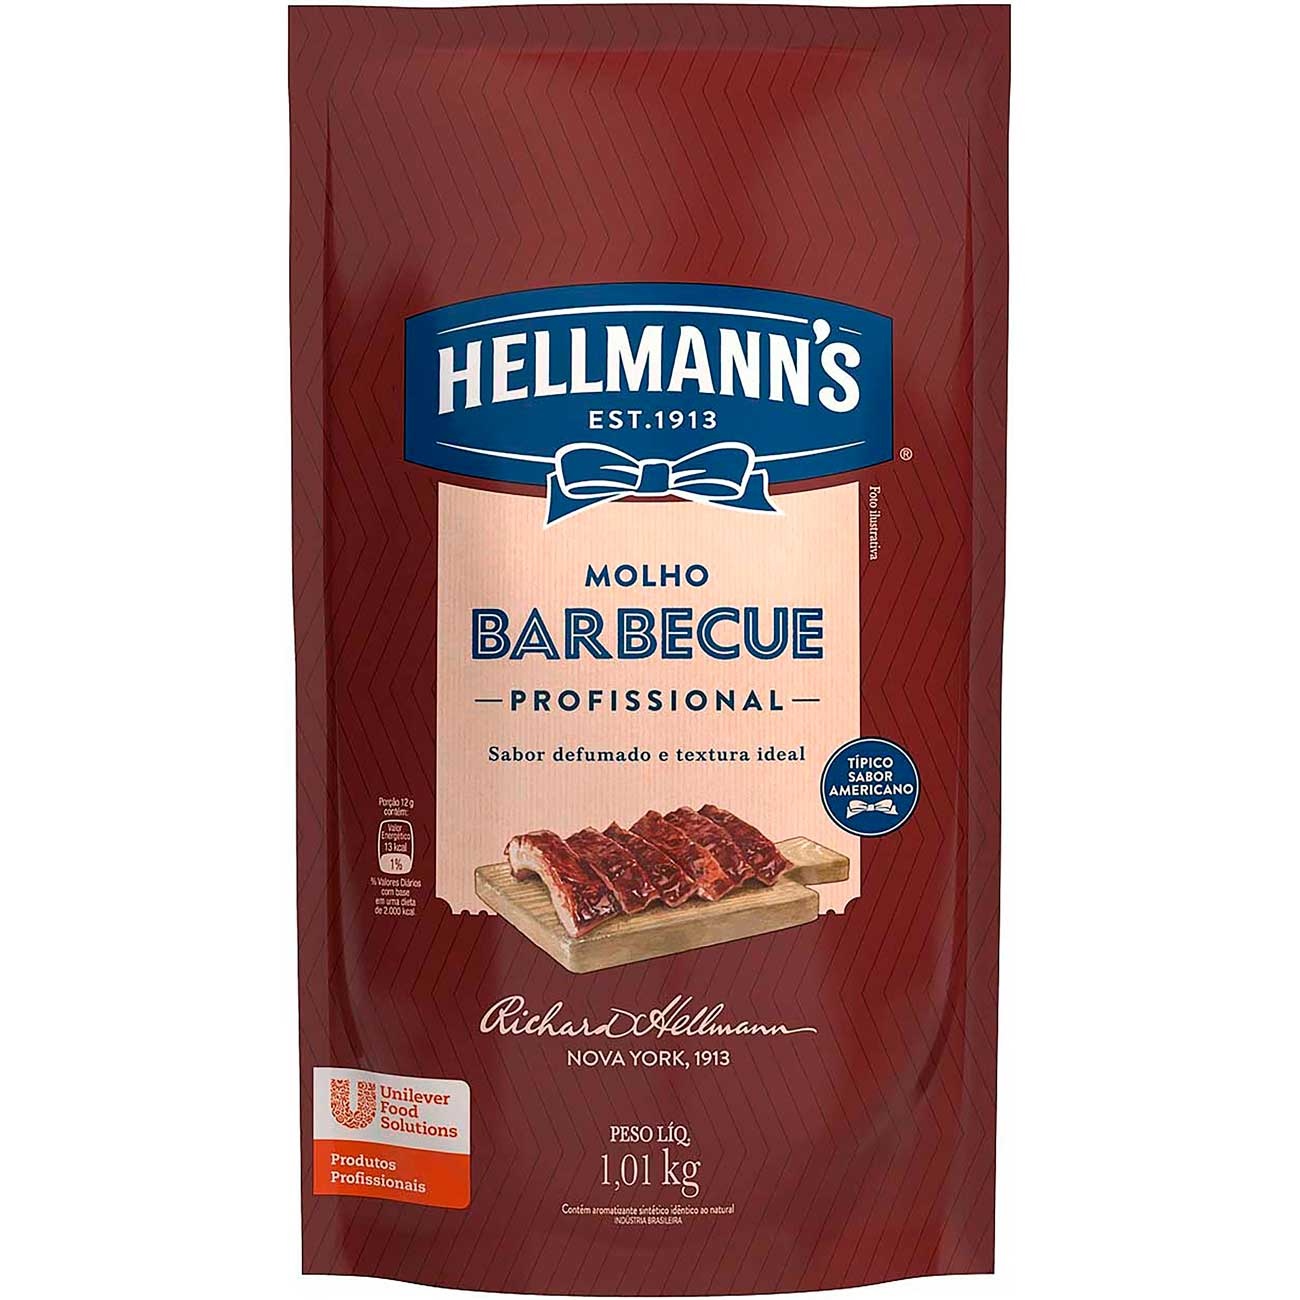 Molho Barbecue Hellmann's Profissional 1,01kg